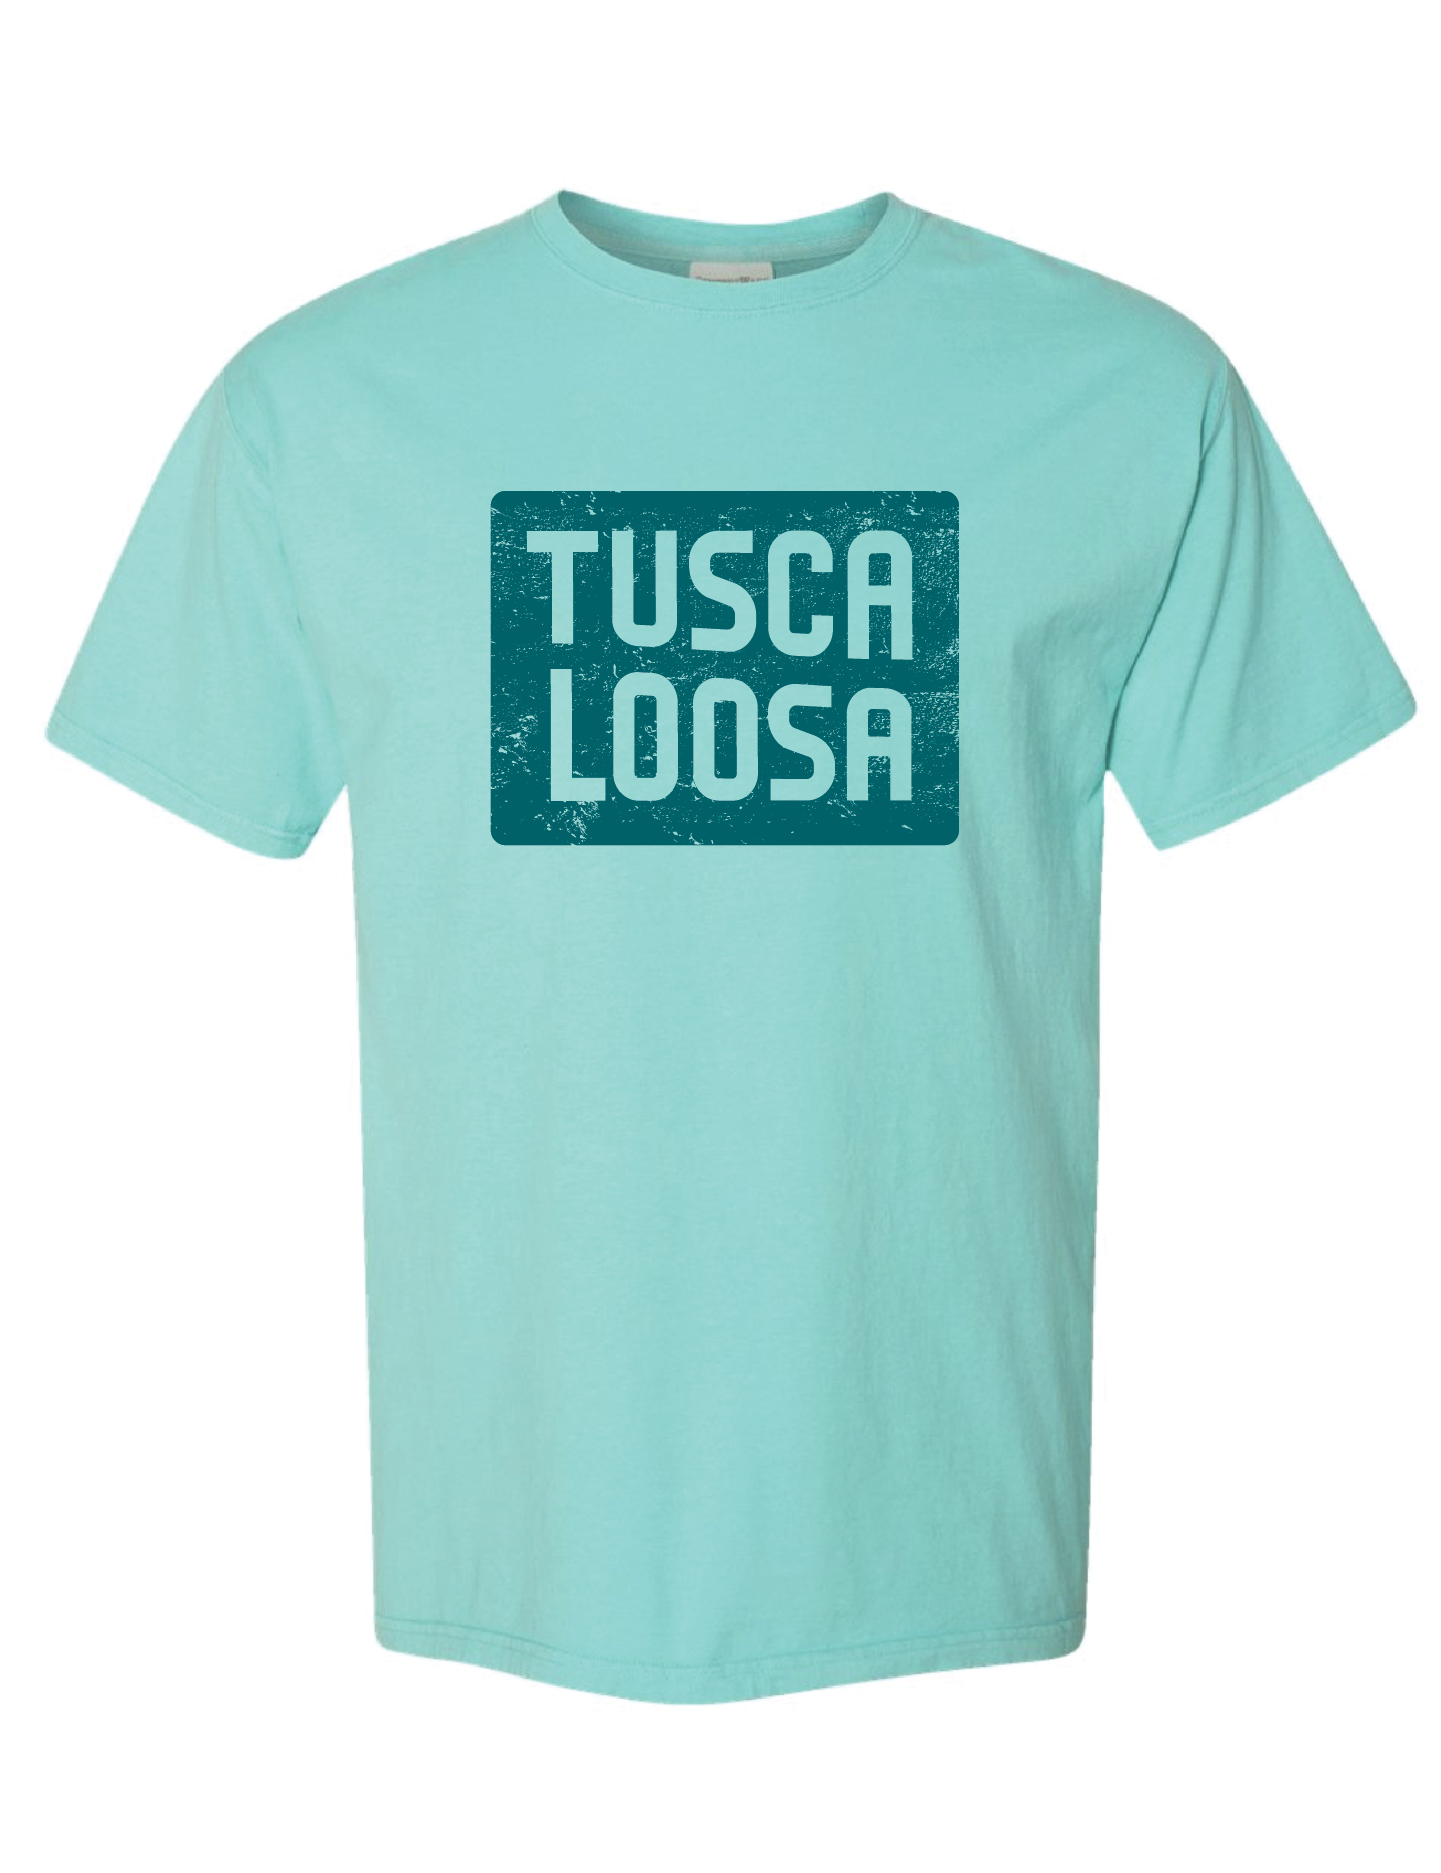 Visit Tuscaloosa: Short Sleeve TEAL TUSCALOOSA Tee